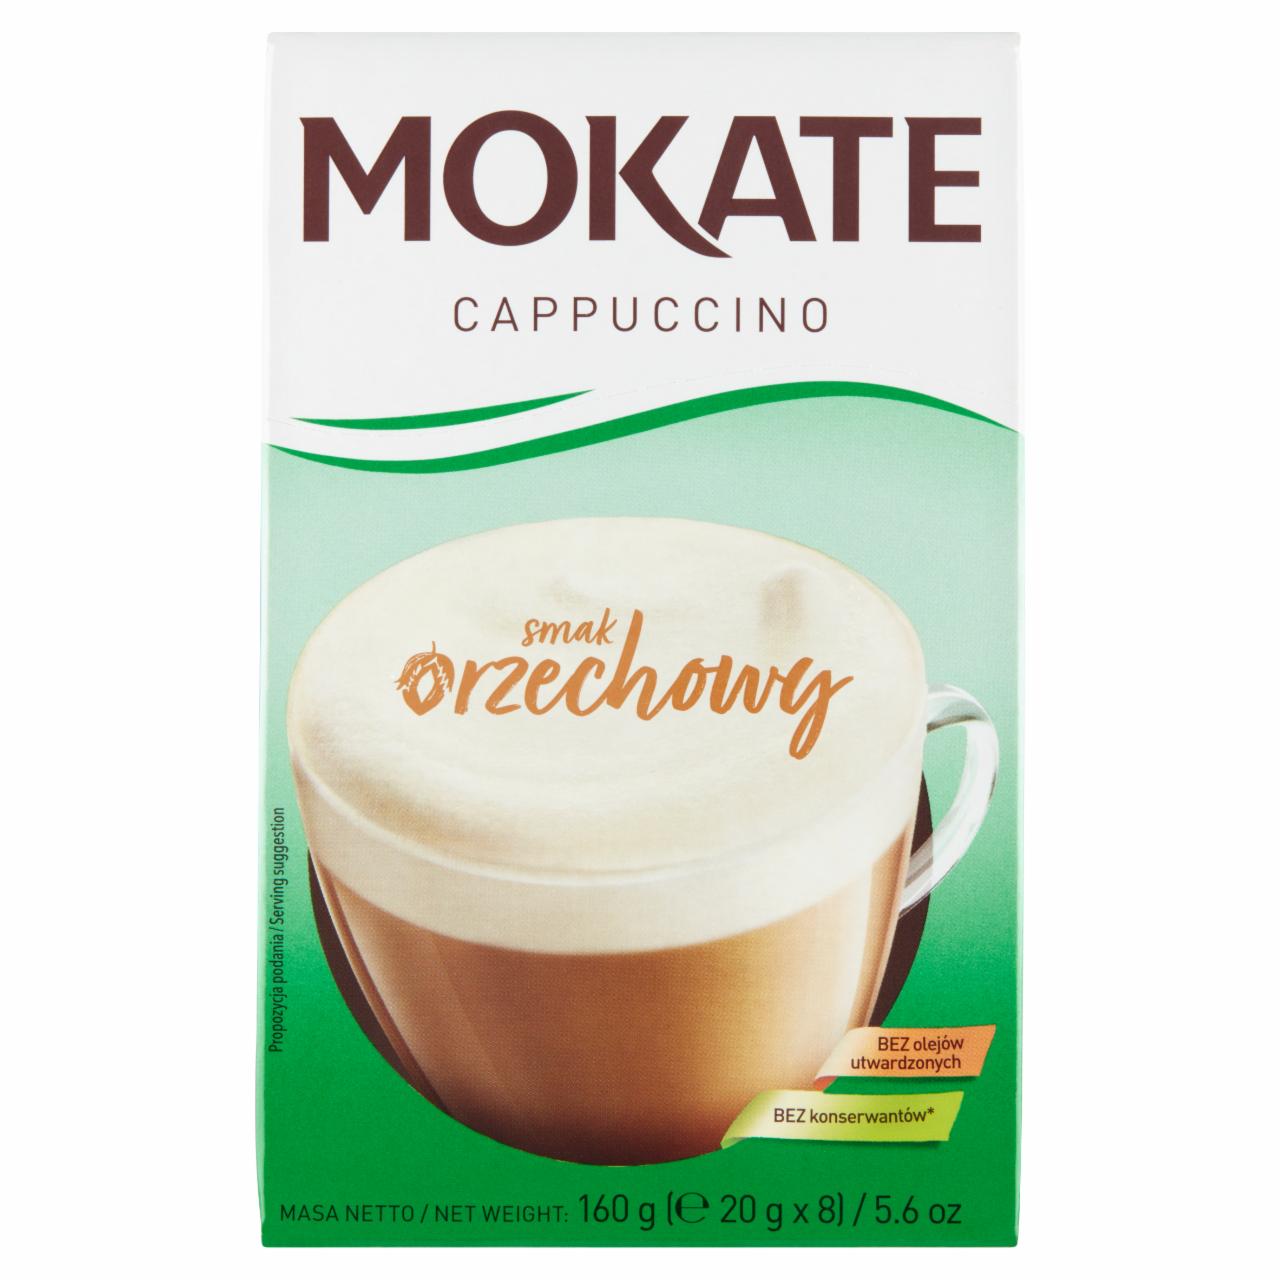 Zdjęcia - Mokate Cappuccino smak orzechowy 160 g (8 x 20 g)